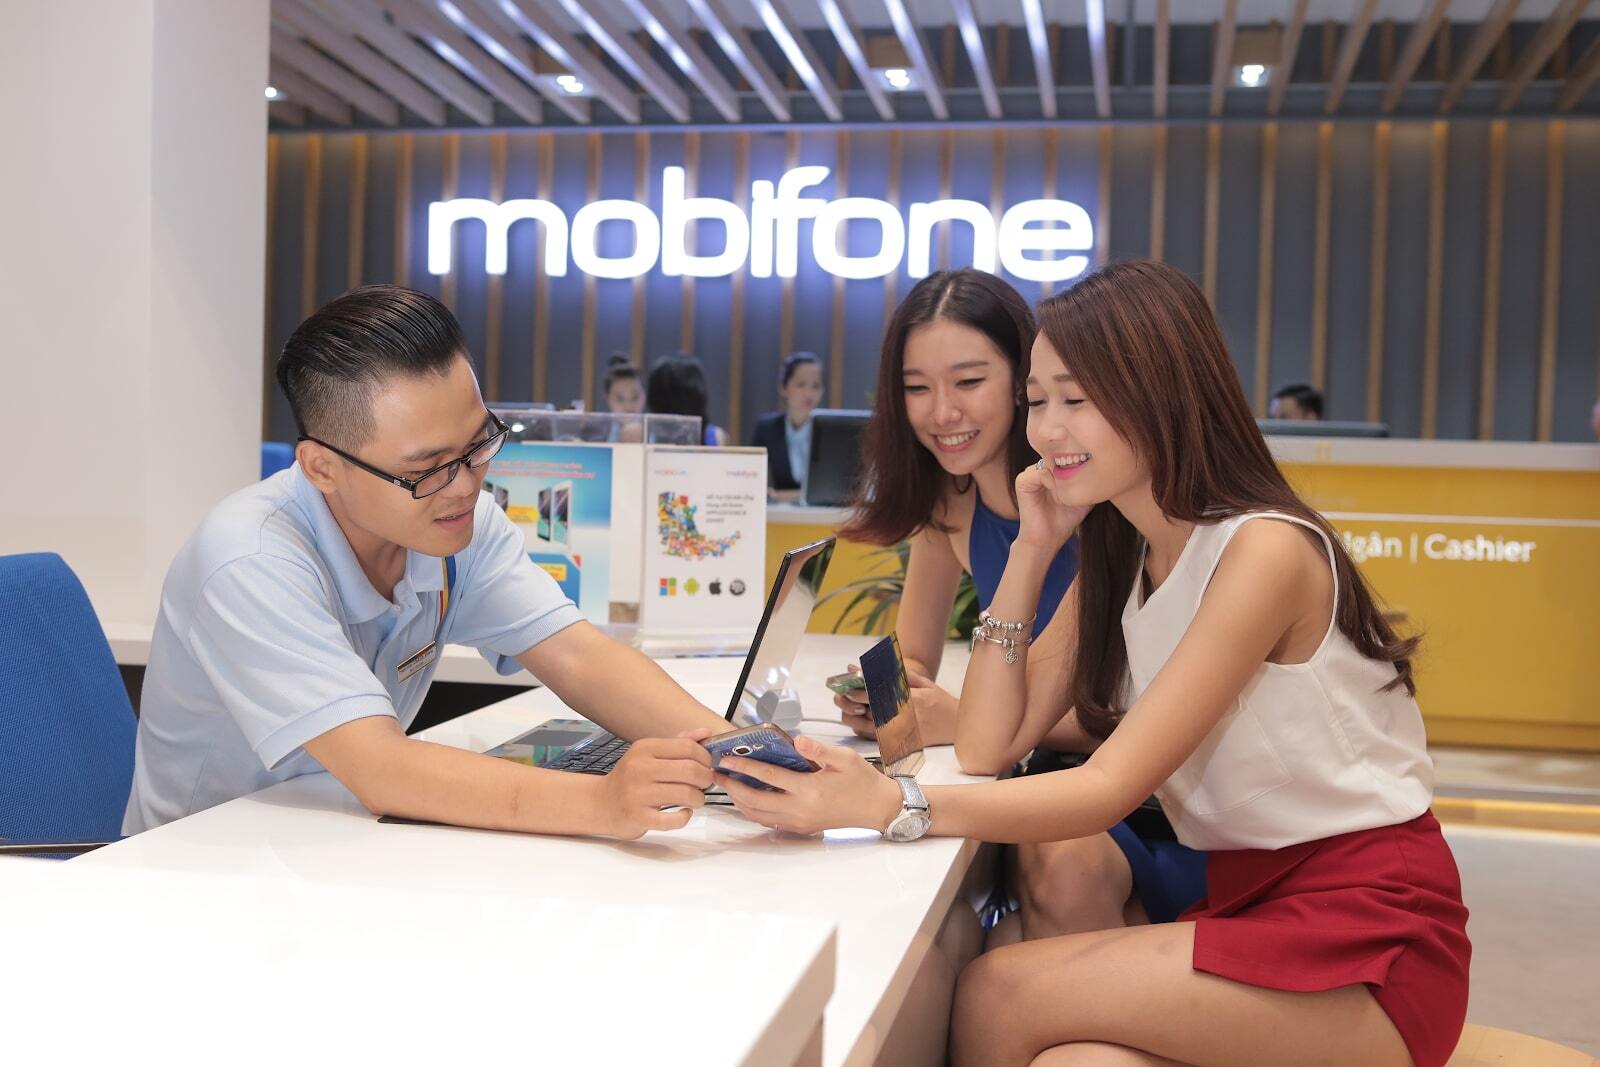  Kiểm tra thông tin qua website Mobifone